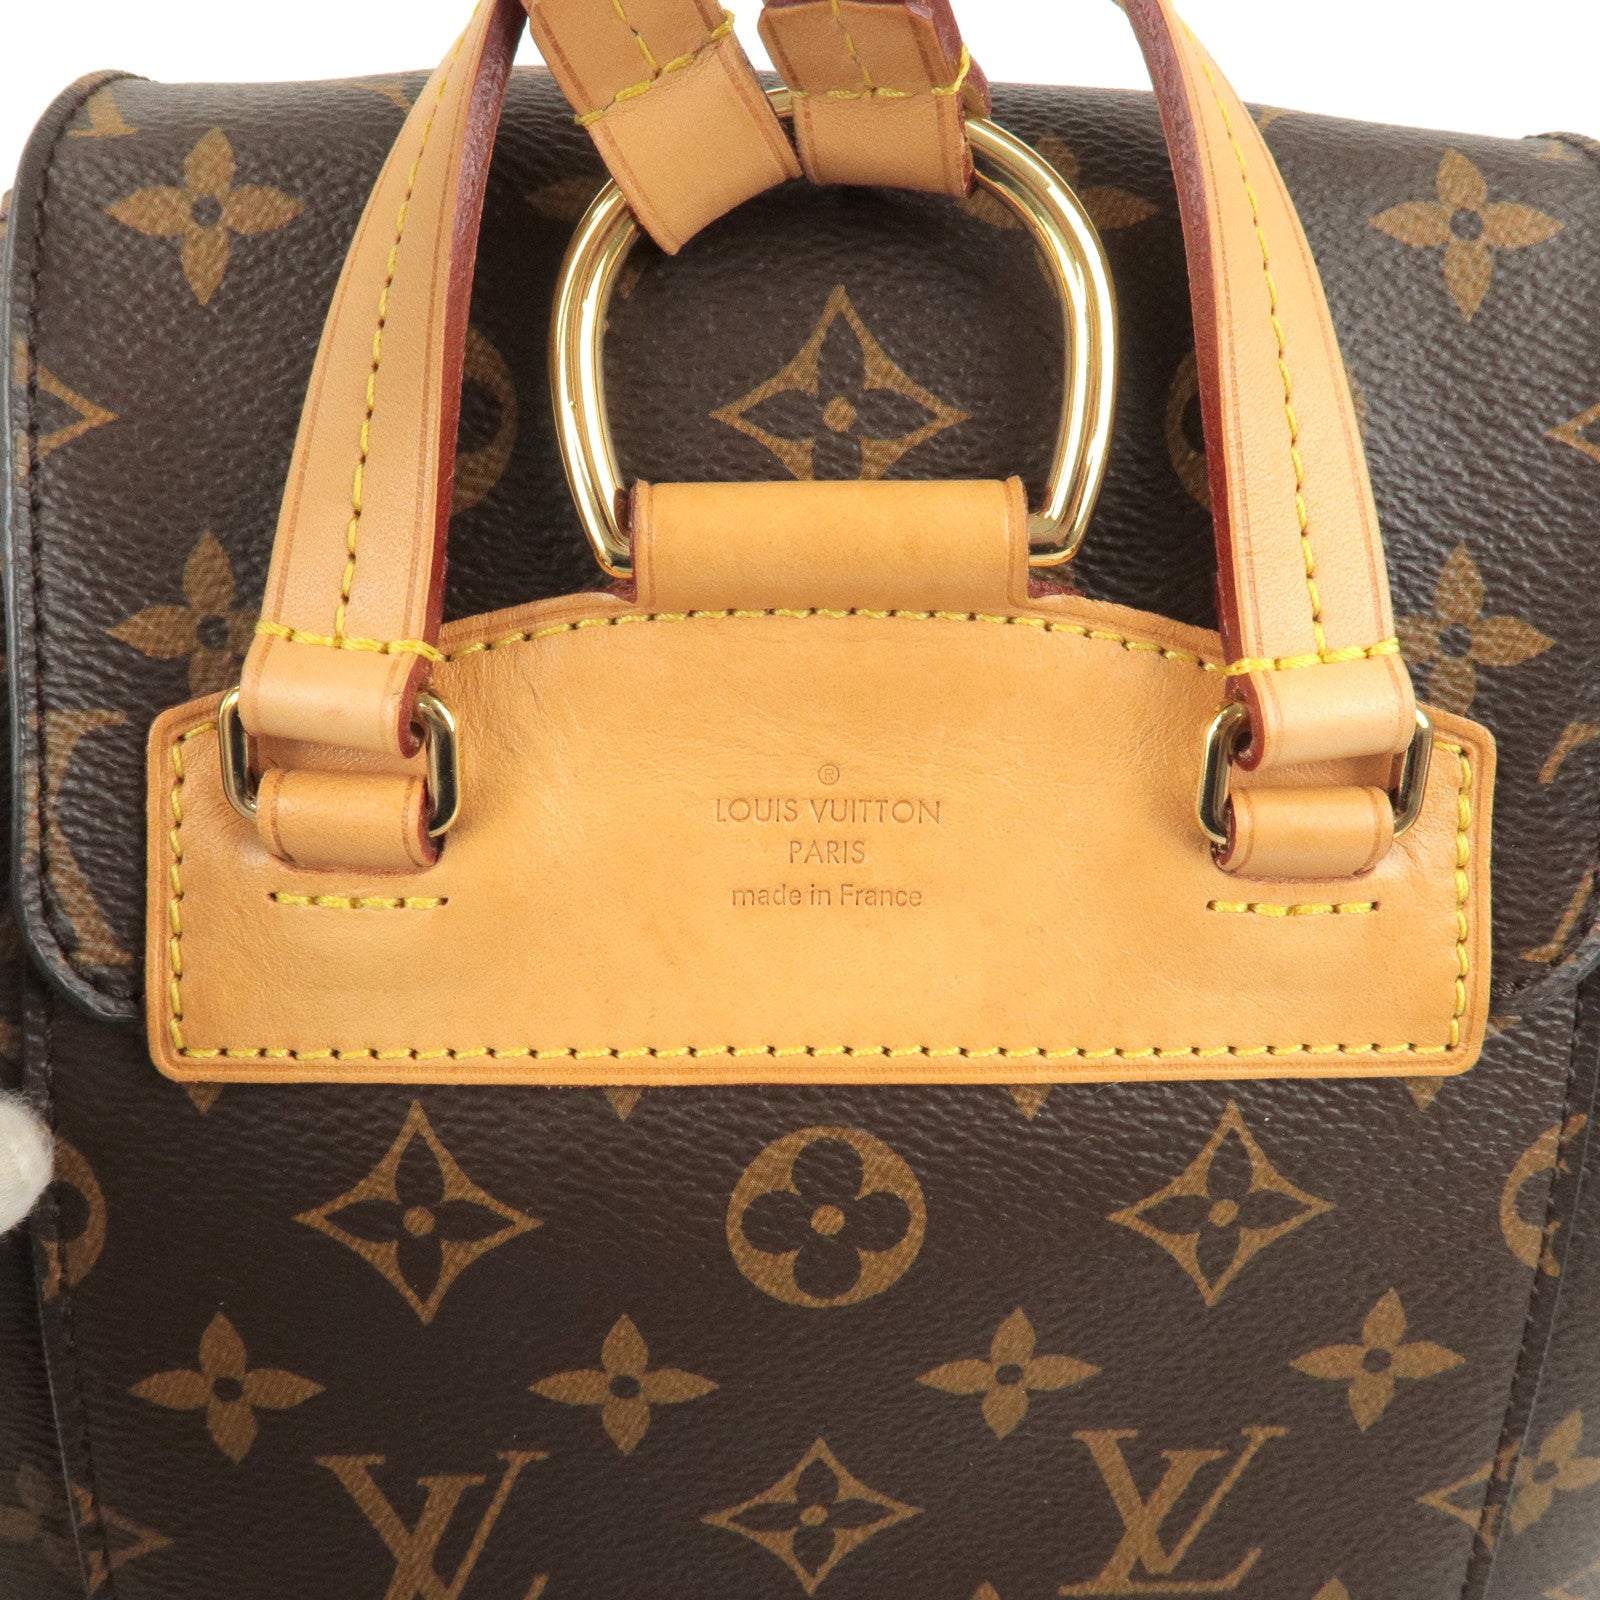 Louis Vuitton 2013 pre-owned Sofia Coppola Tote Bag - Farfetch